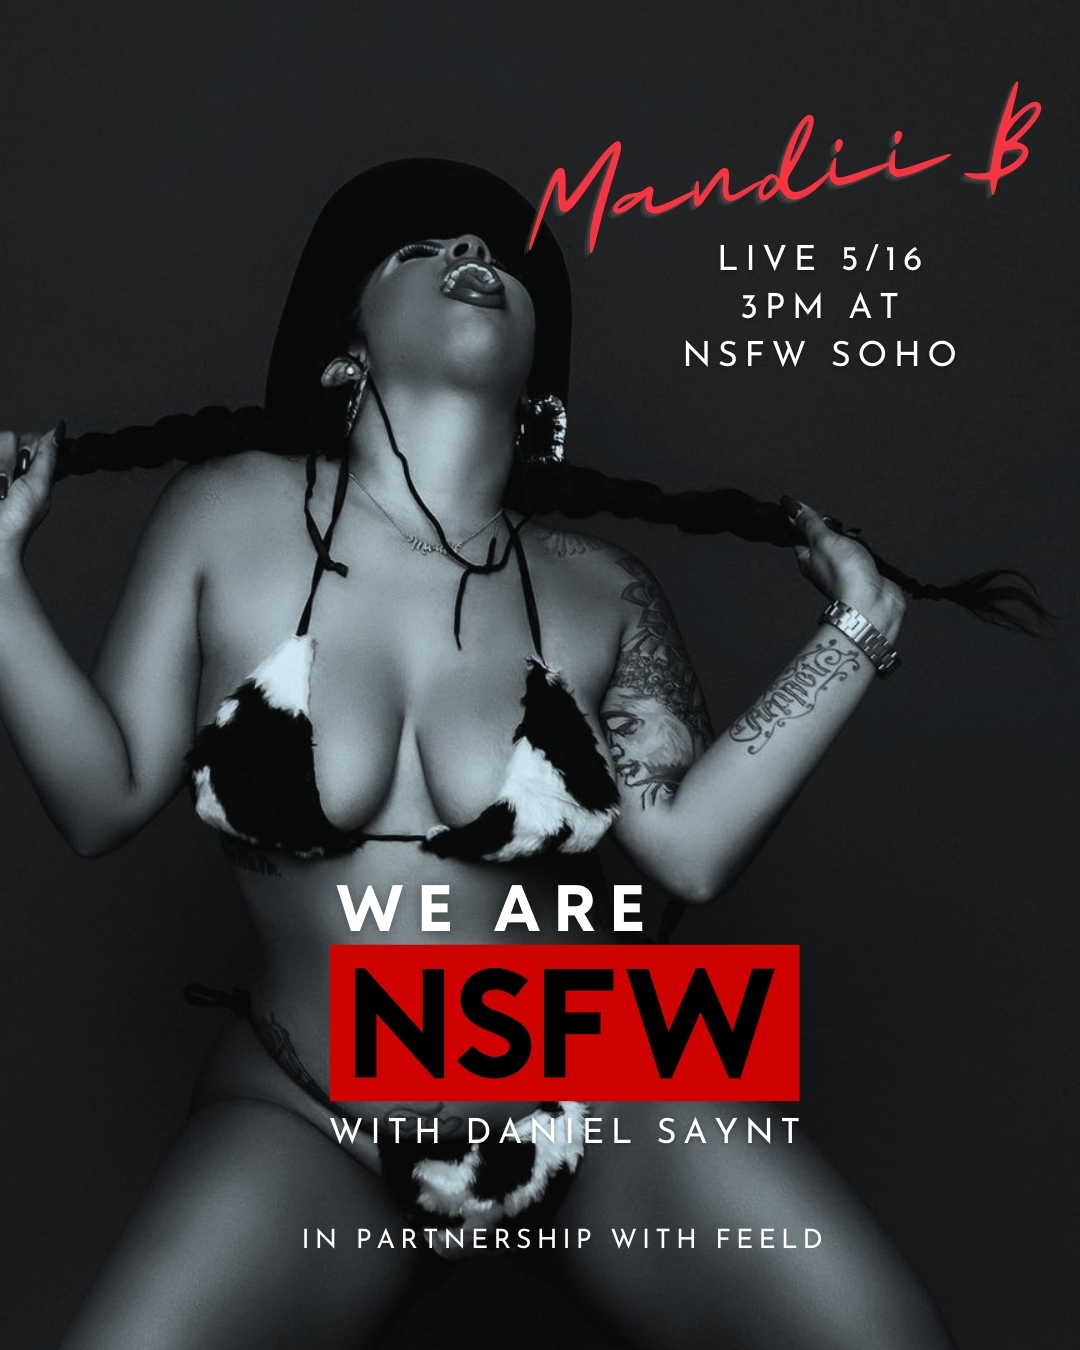 We Are NSFW: Mandii B